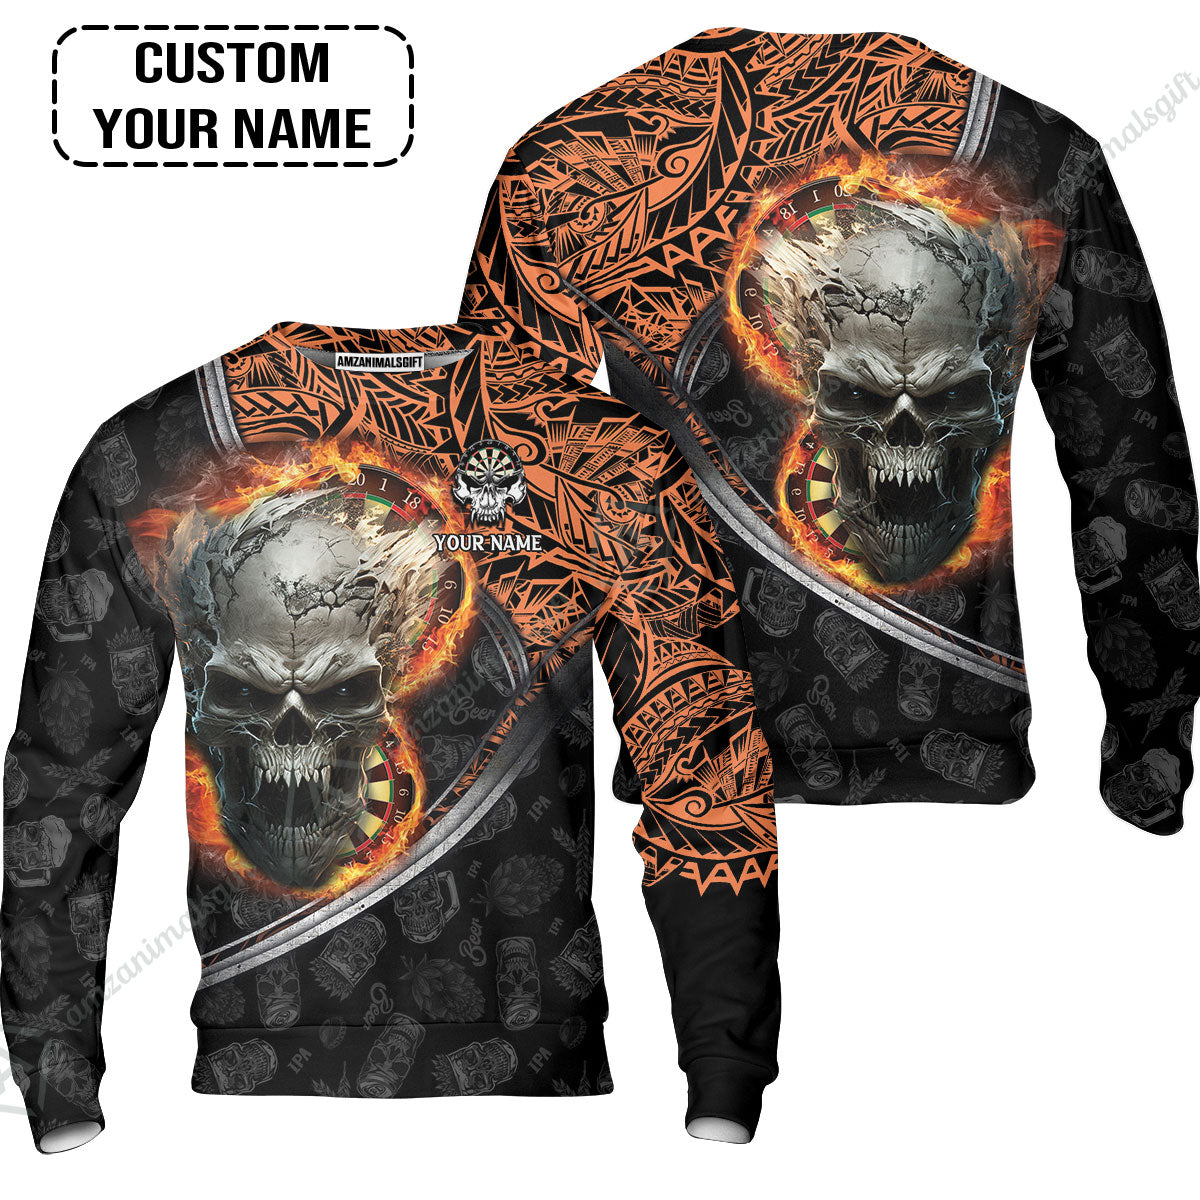 Darts Custom Name Sweatshirt, Skull Maori Tattoo And Darts Custom Name Sweatshirt, Flame Bullseye Dartboard Personalized Sweatshirt